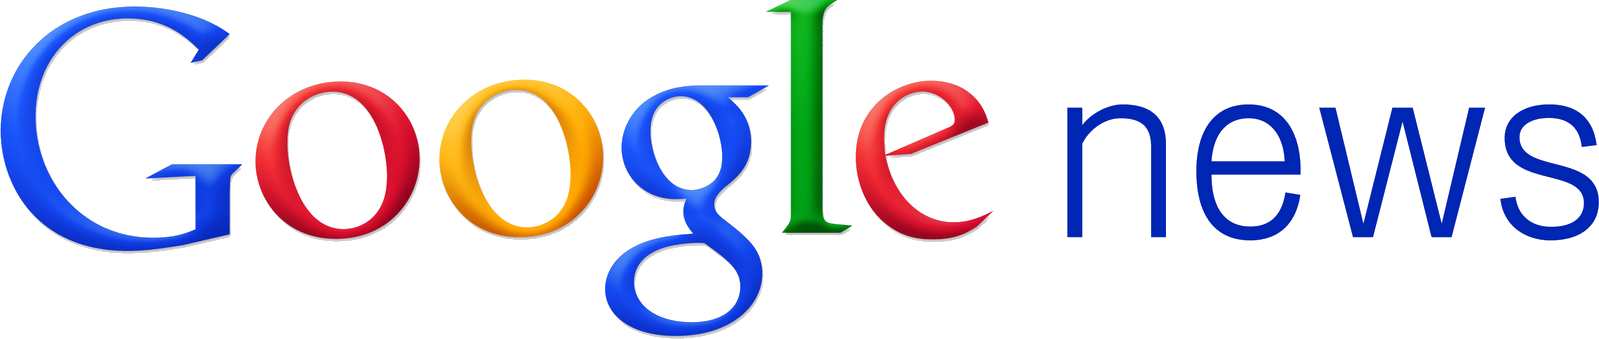 google news logo png #4381